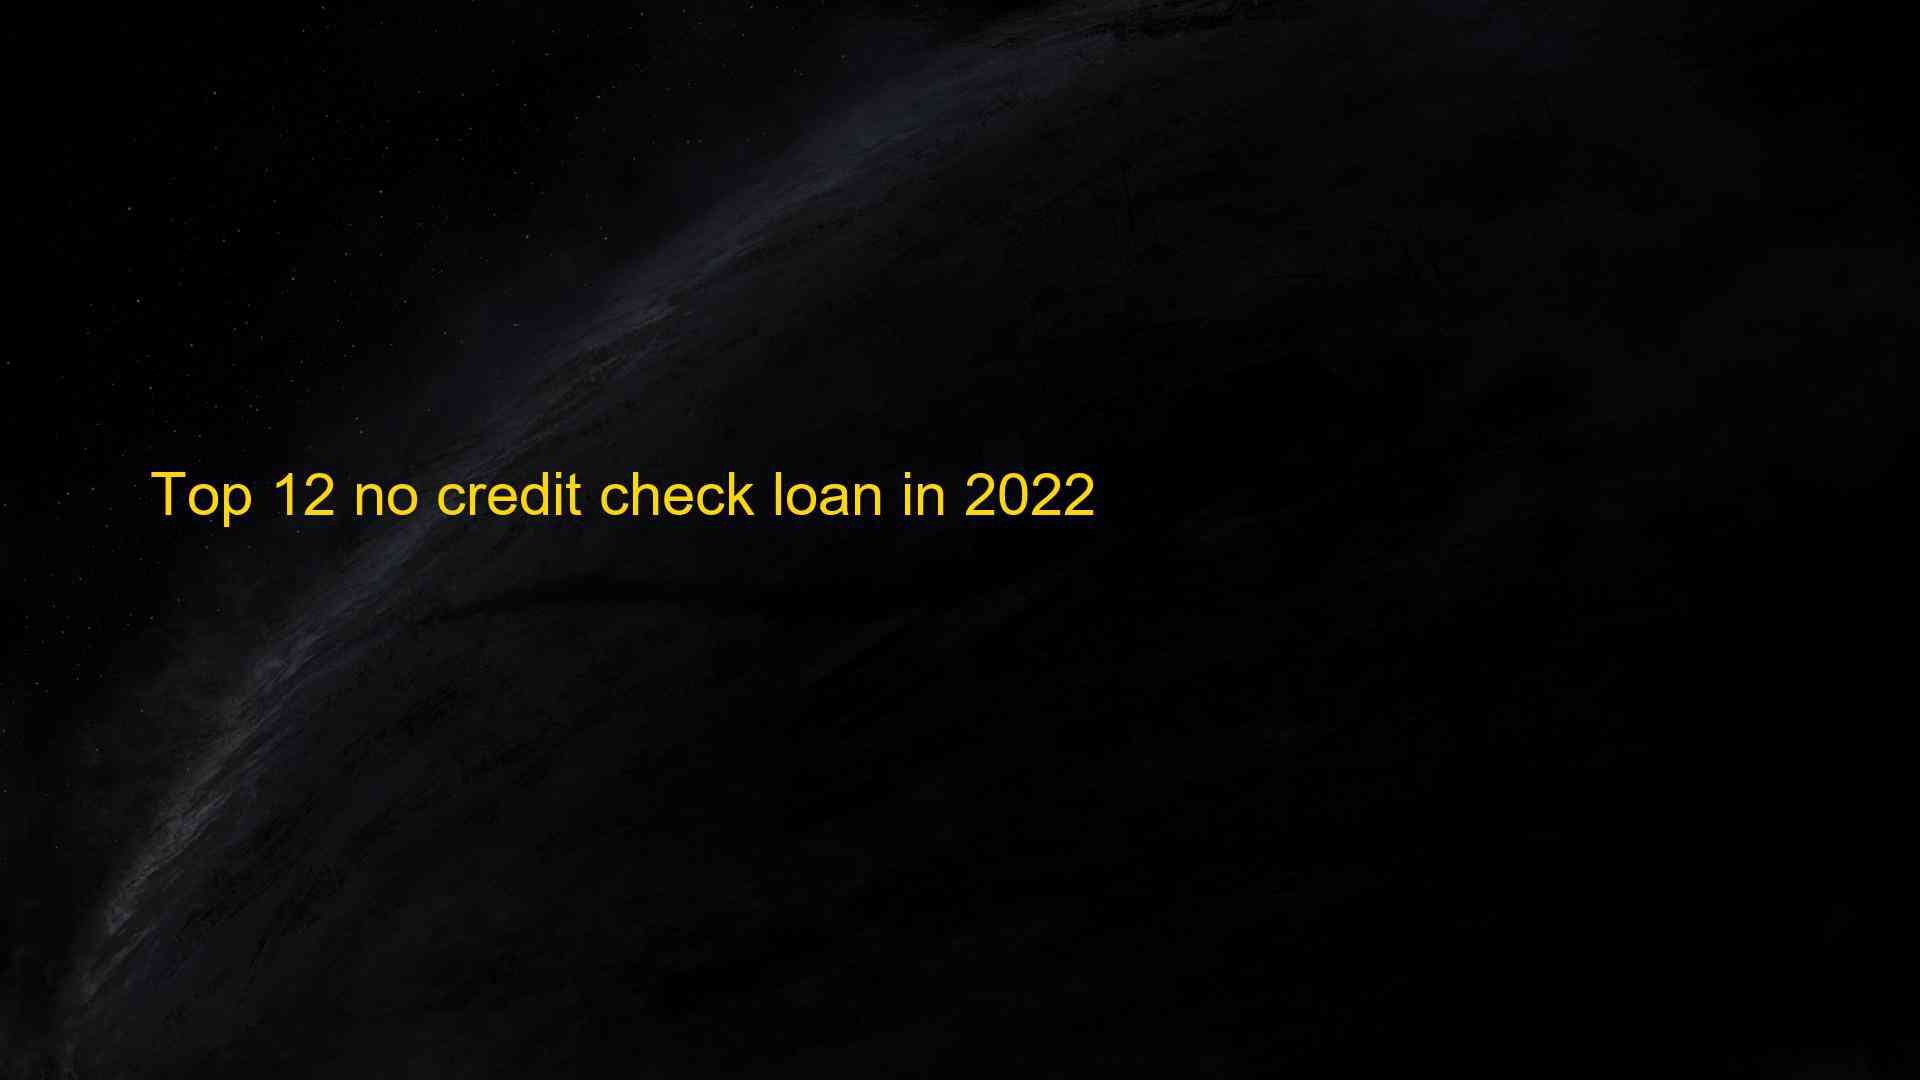 Top 12 no credit check loan in 2022 1659602405